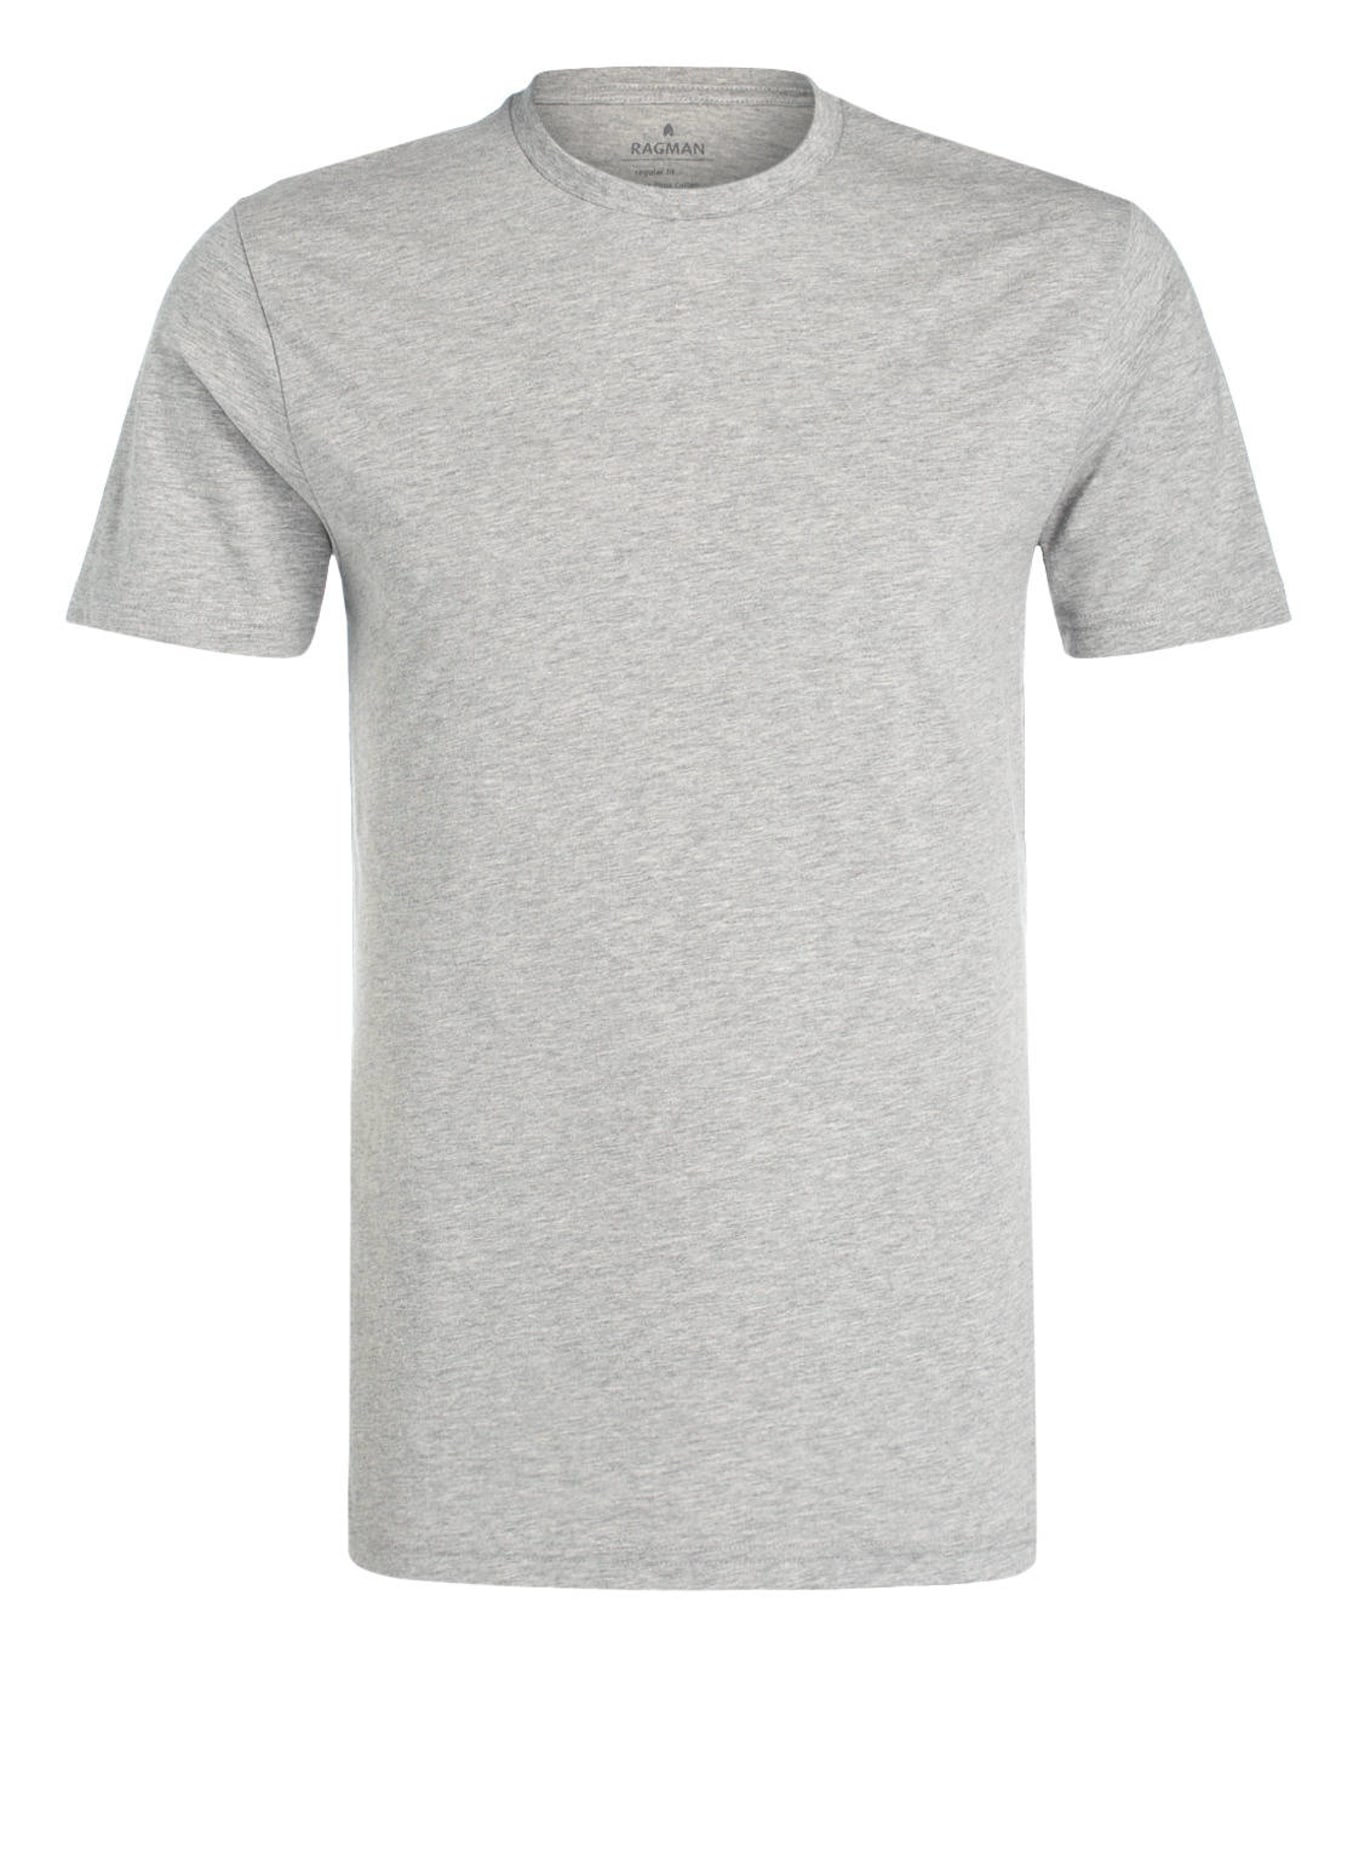 RAGMAN T-shirt regular fit, Color: GRAY MÉLANGE (Image 1)